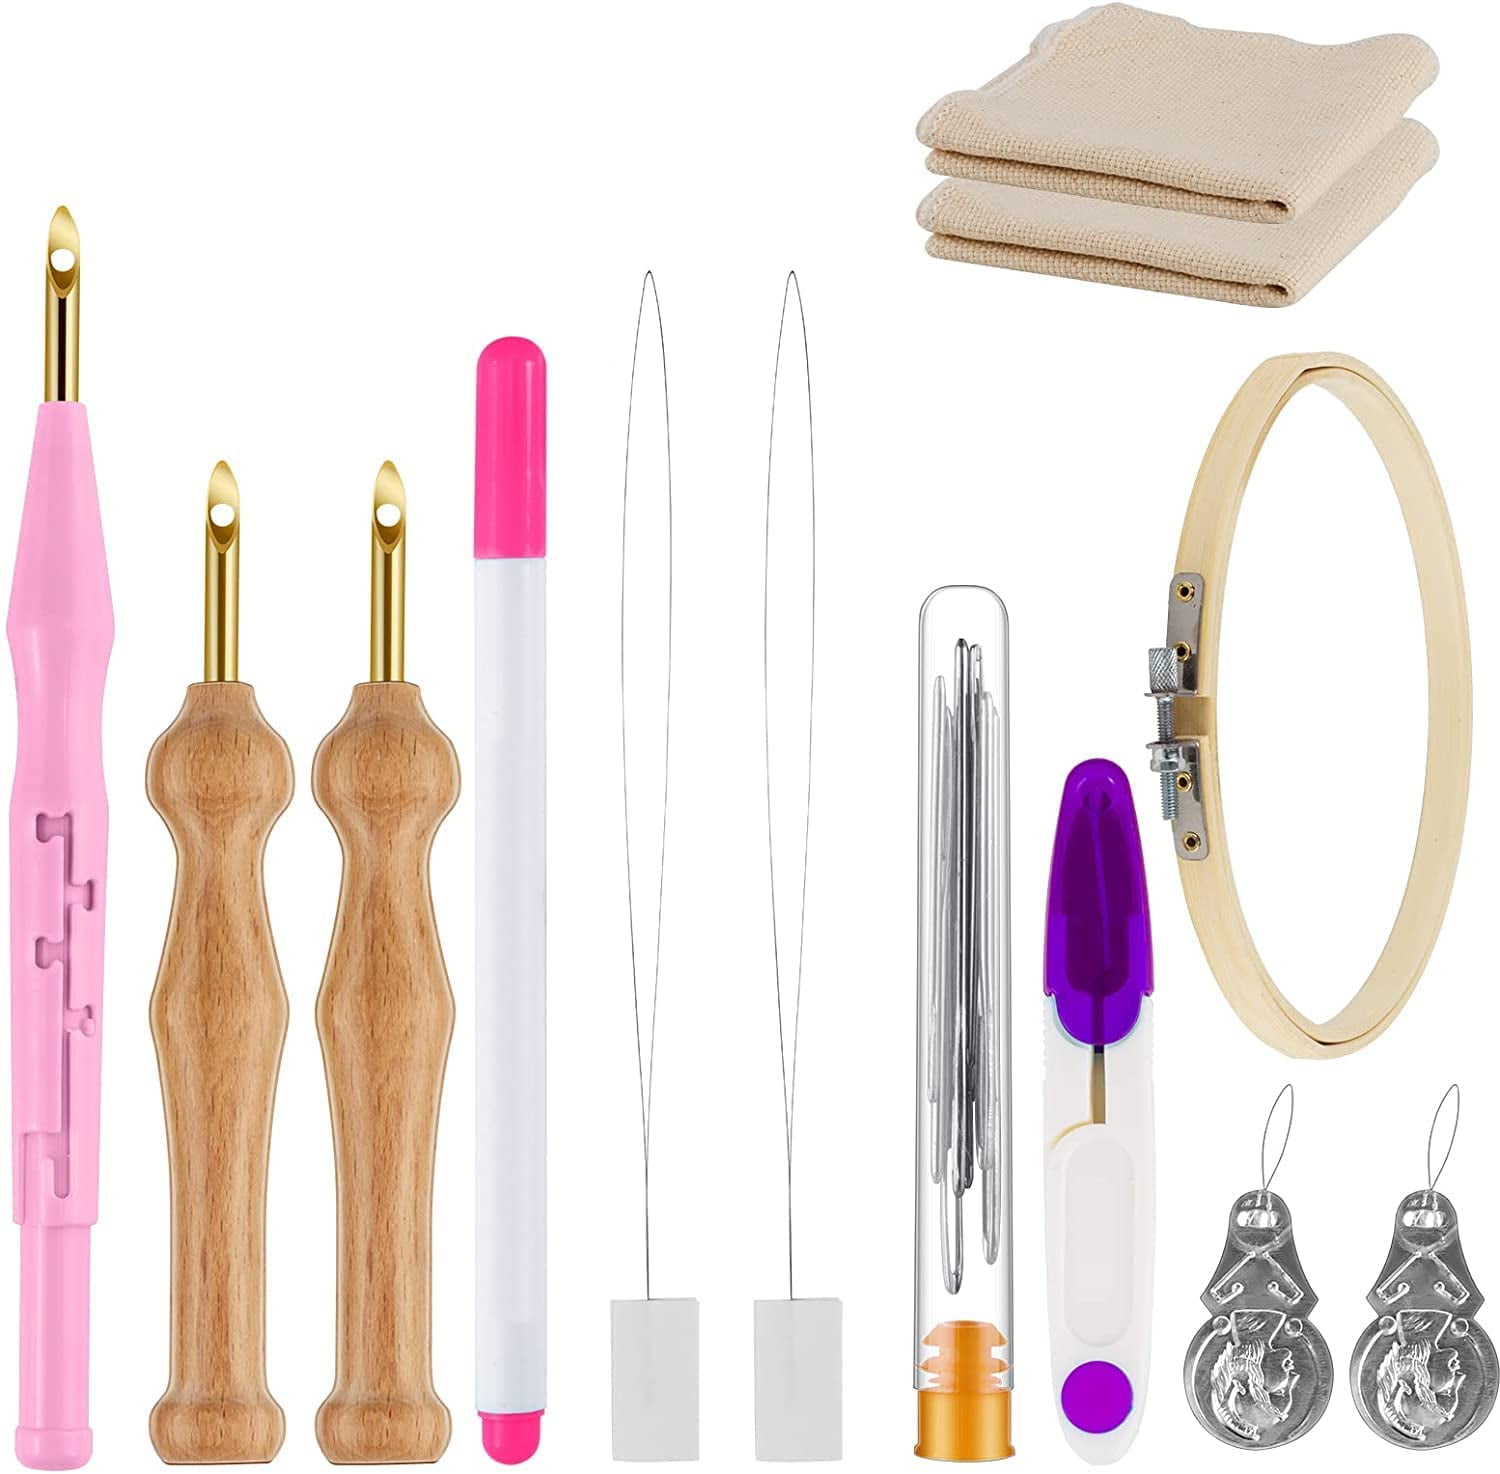 Punch Needles Start Kit/ Beginner Punch Needle Kit With Adjustable